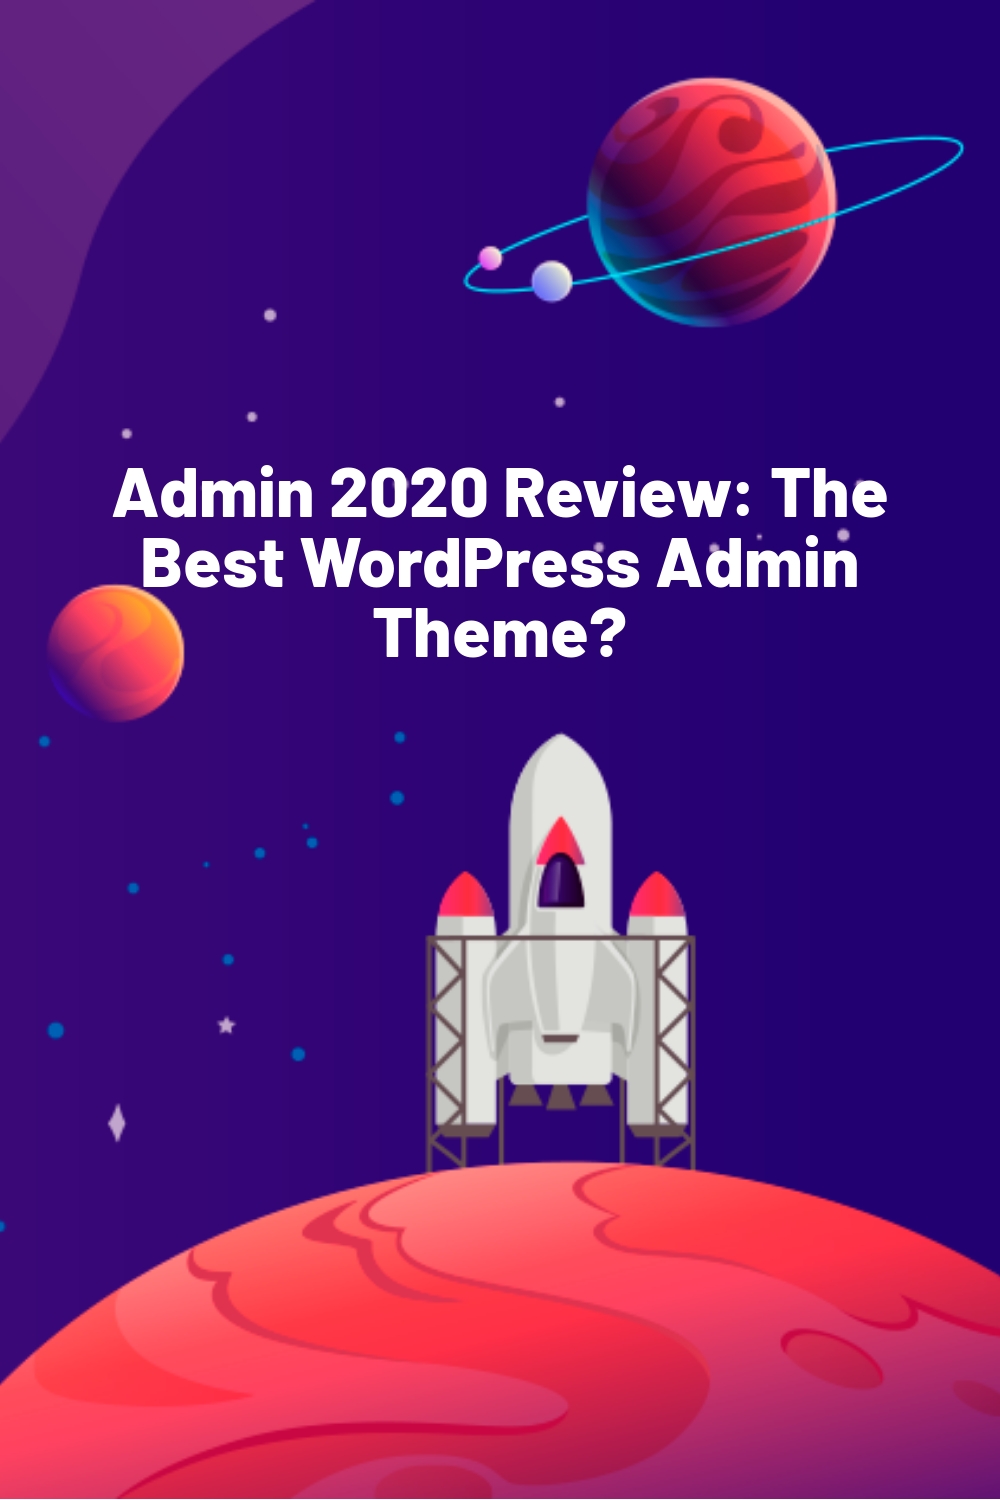 Admin 2020 Review: The Best WordPress Admin Theme?